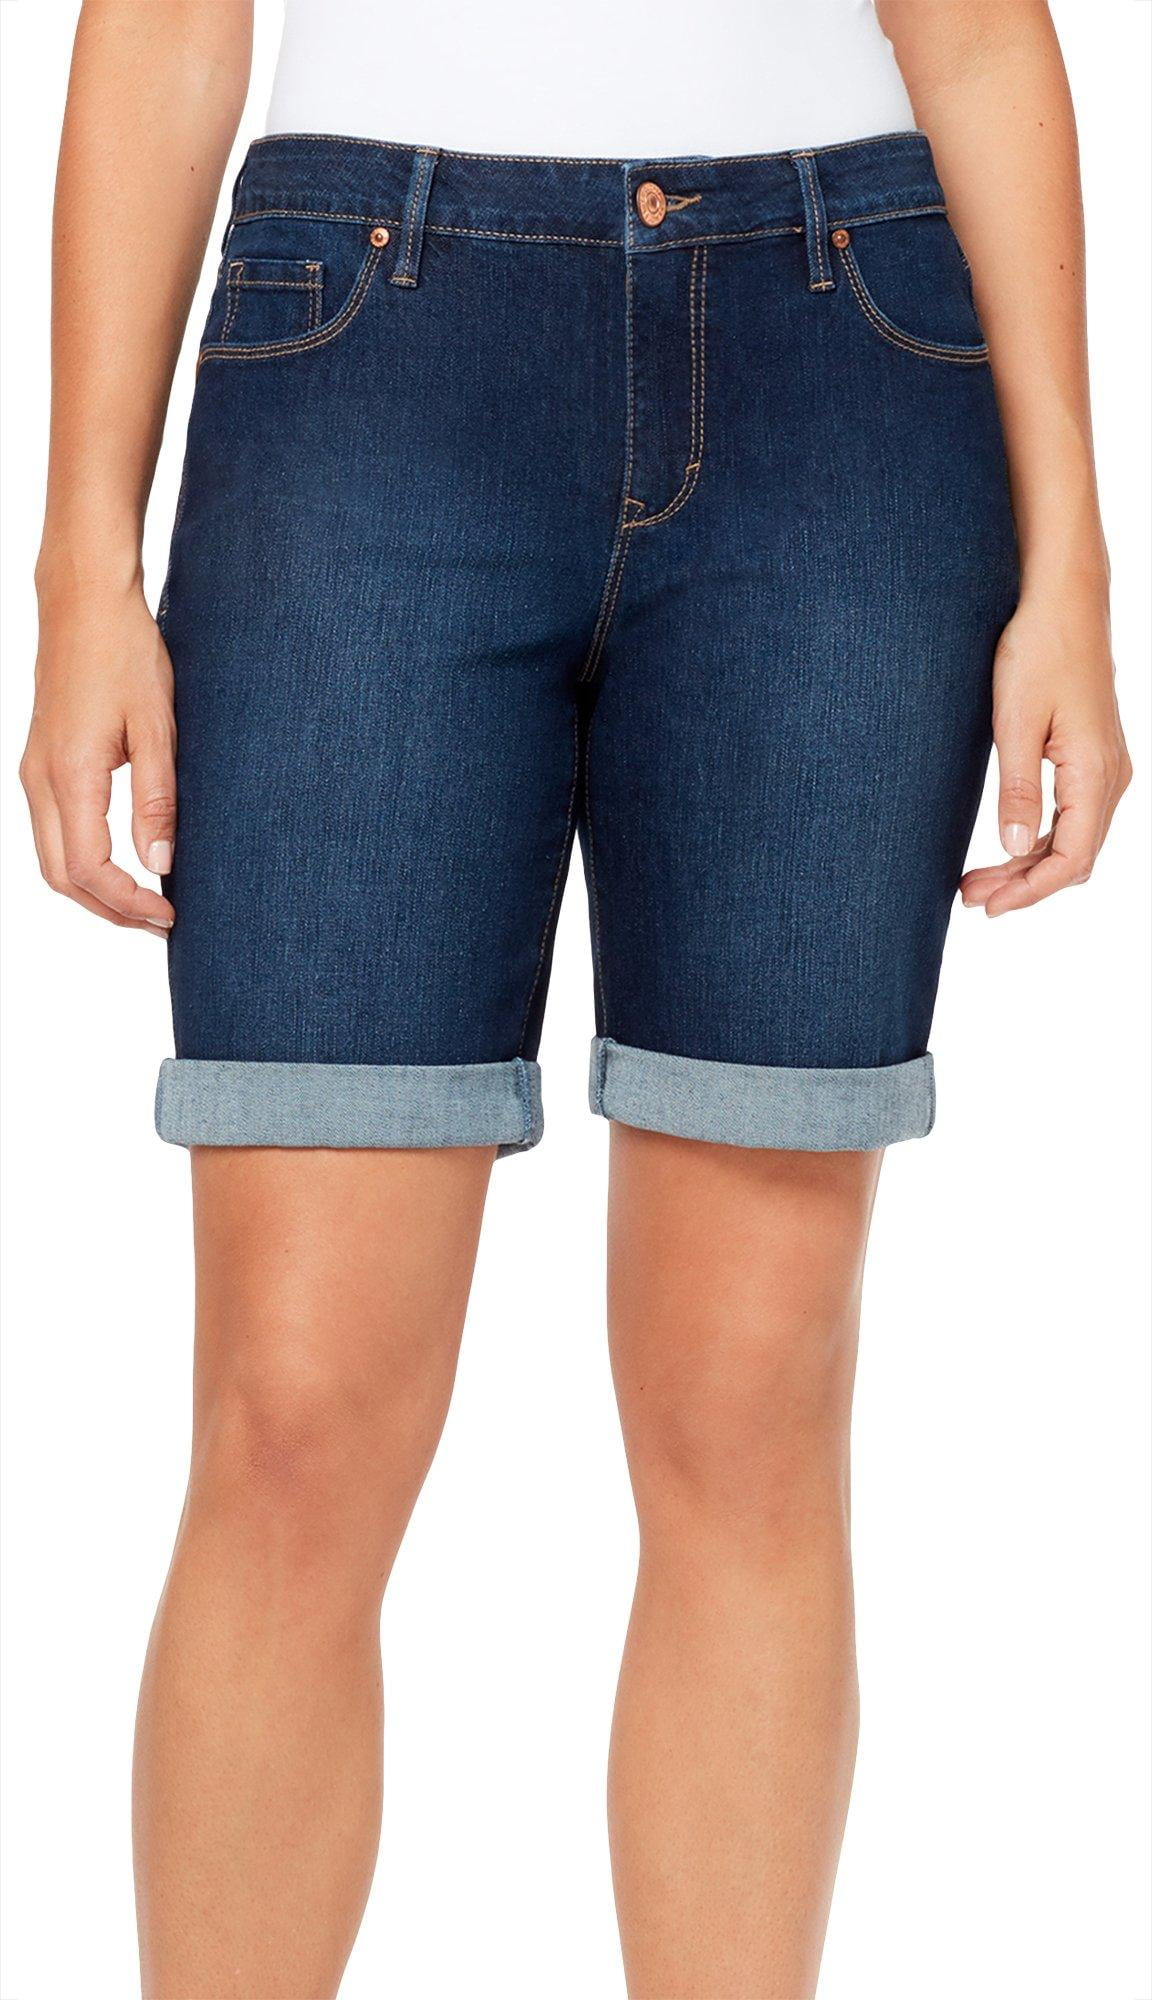 gloria vanderbilt jean shorts